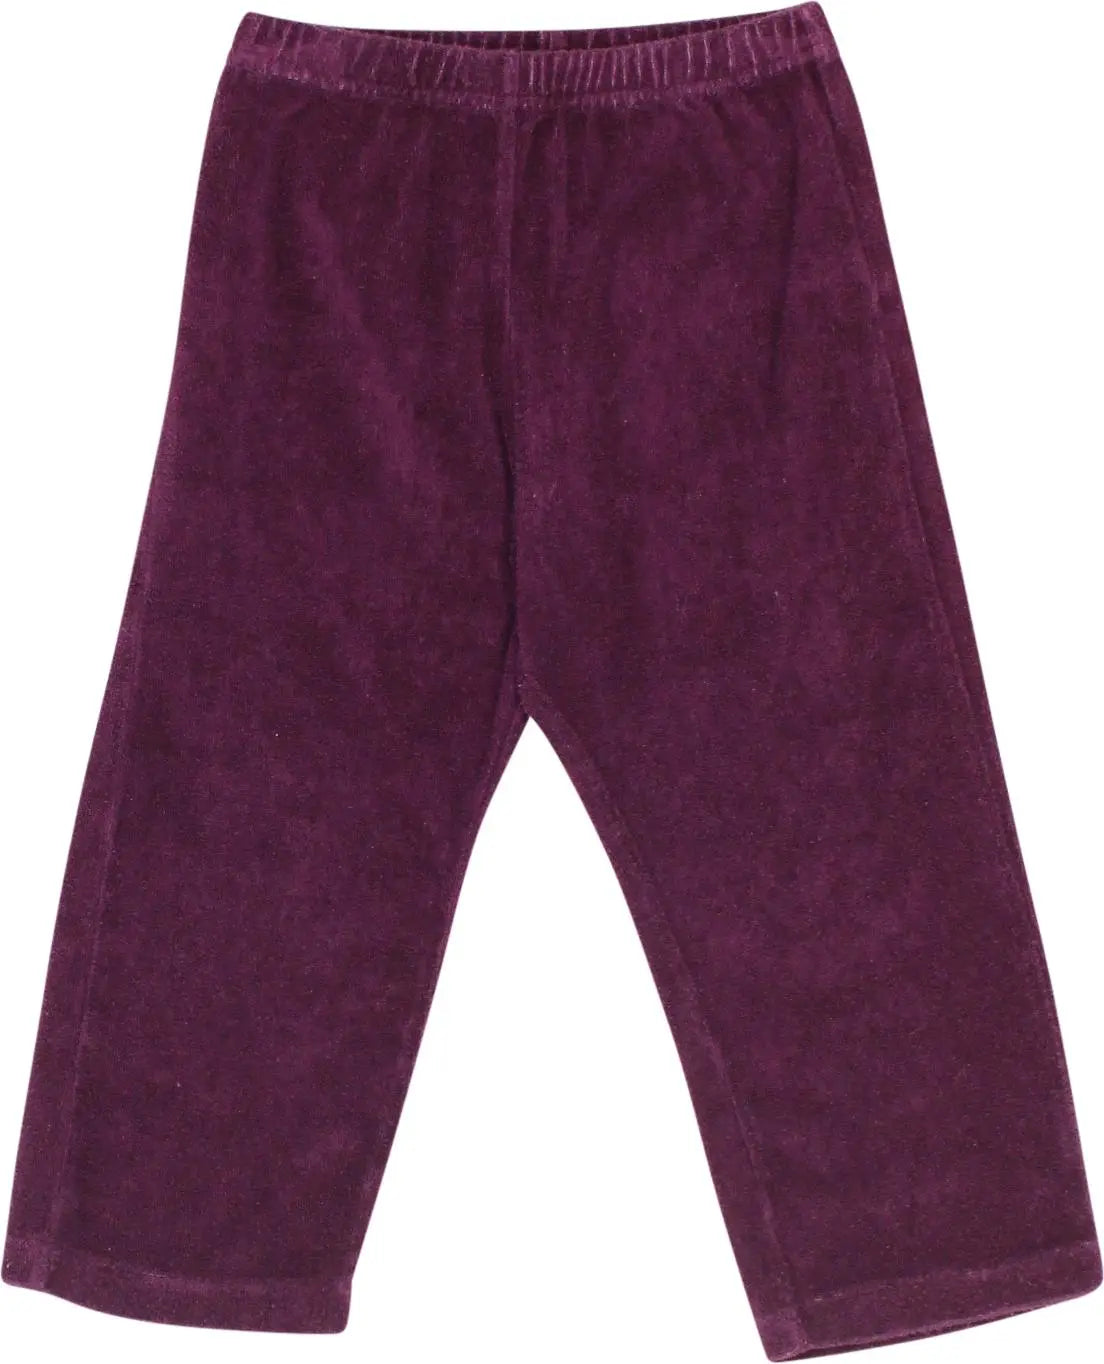 HEMA - Purple Joggers Pyjama Pants- ThriftTale.com - Vintage and second handclothing